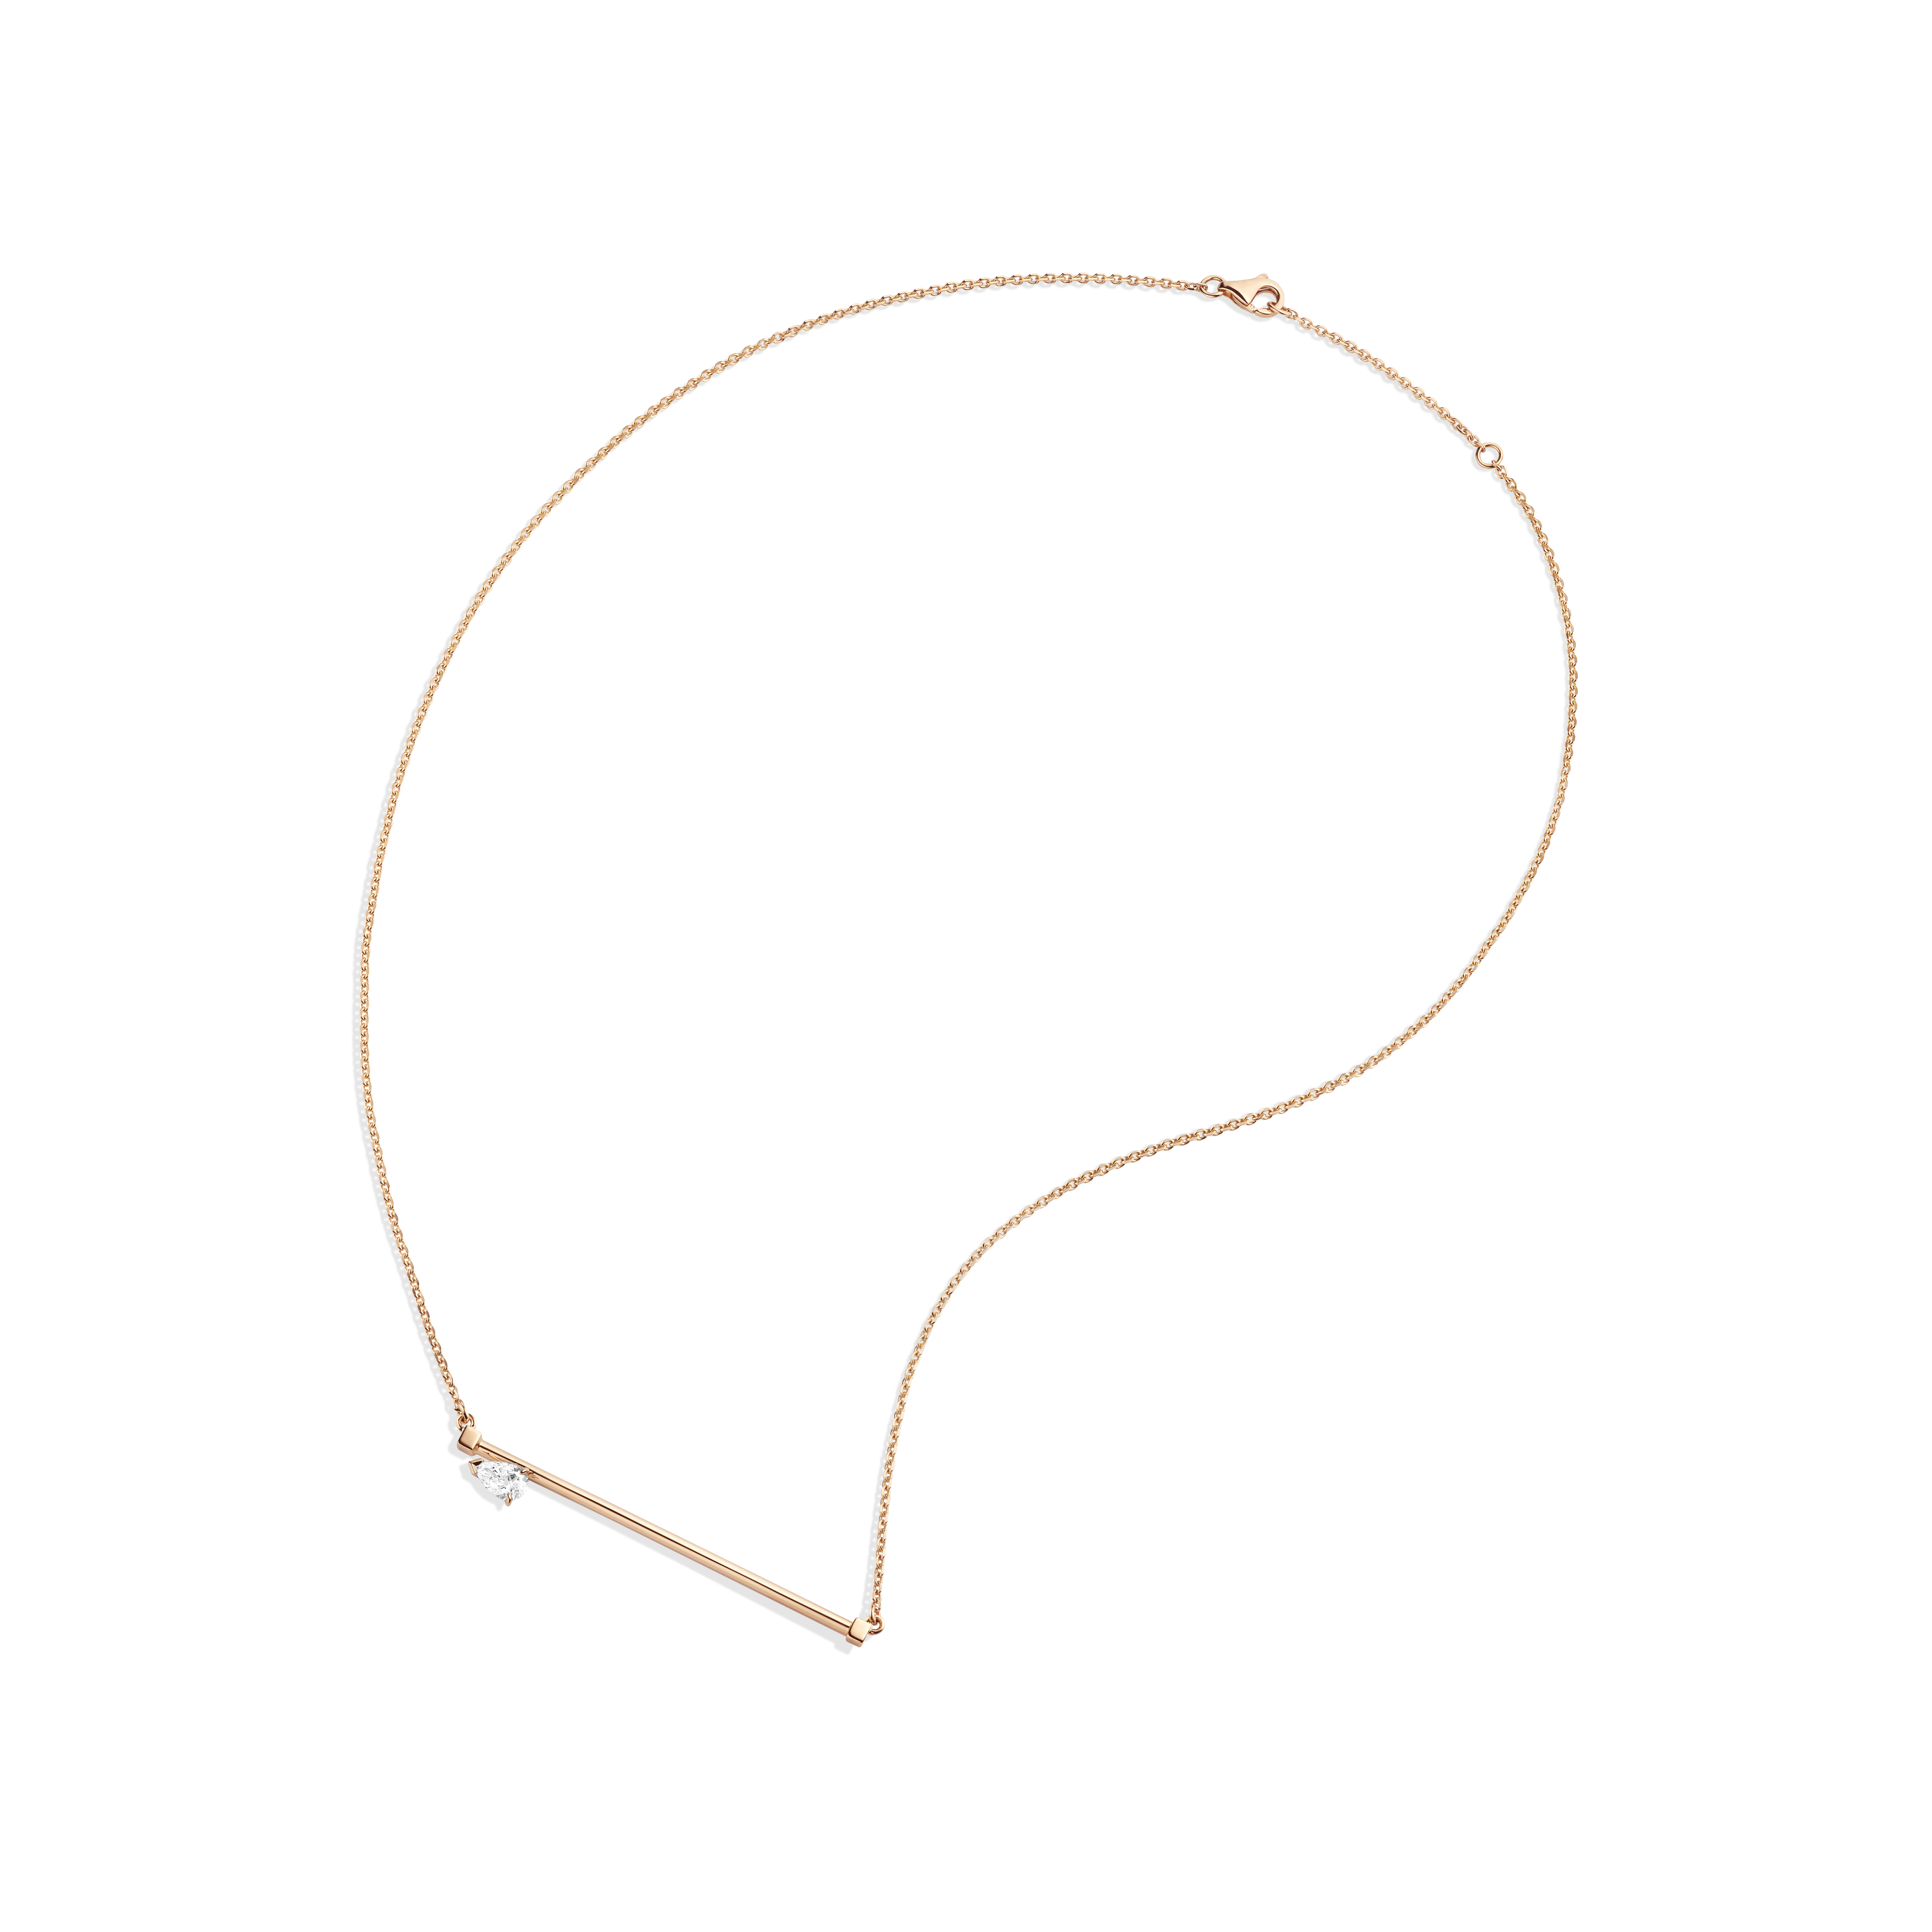 Repossi Pink Gold Serti Sur Vide Necklace at Meridian Jewelers